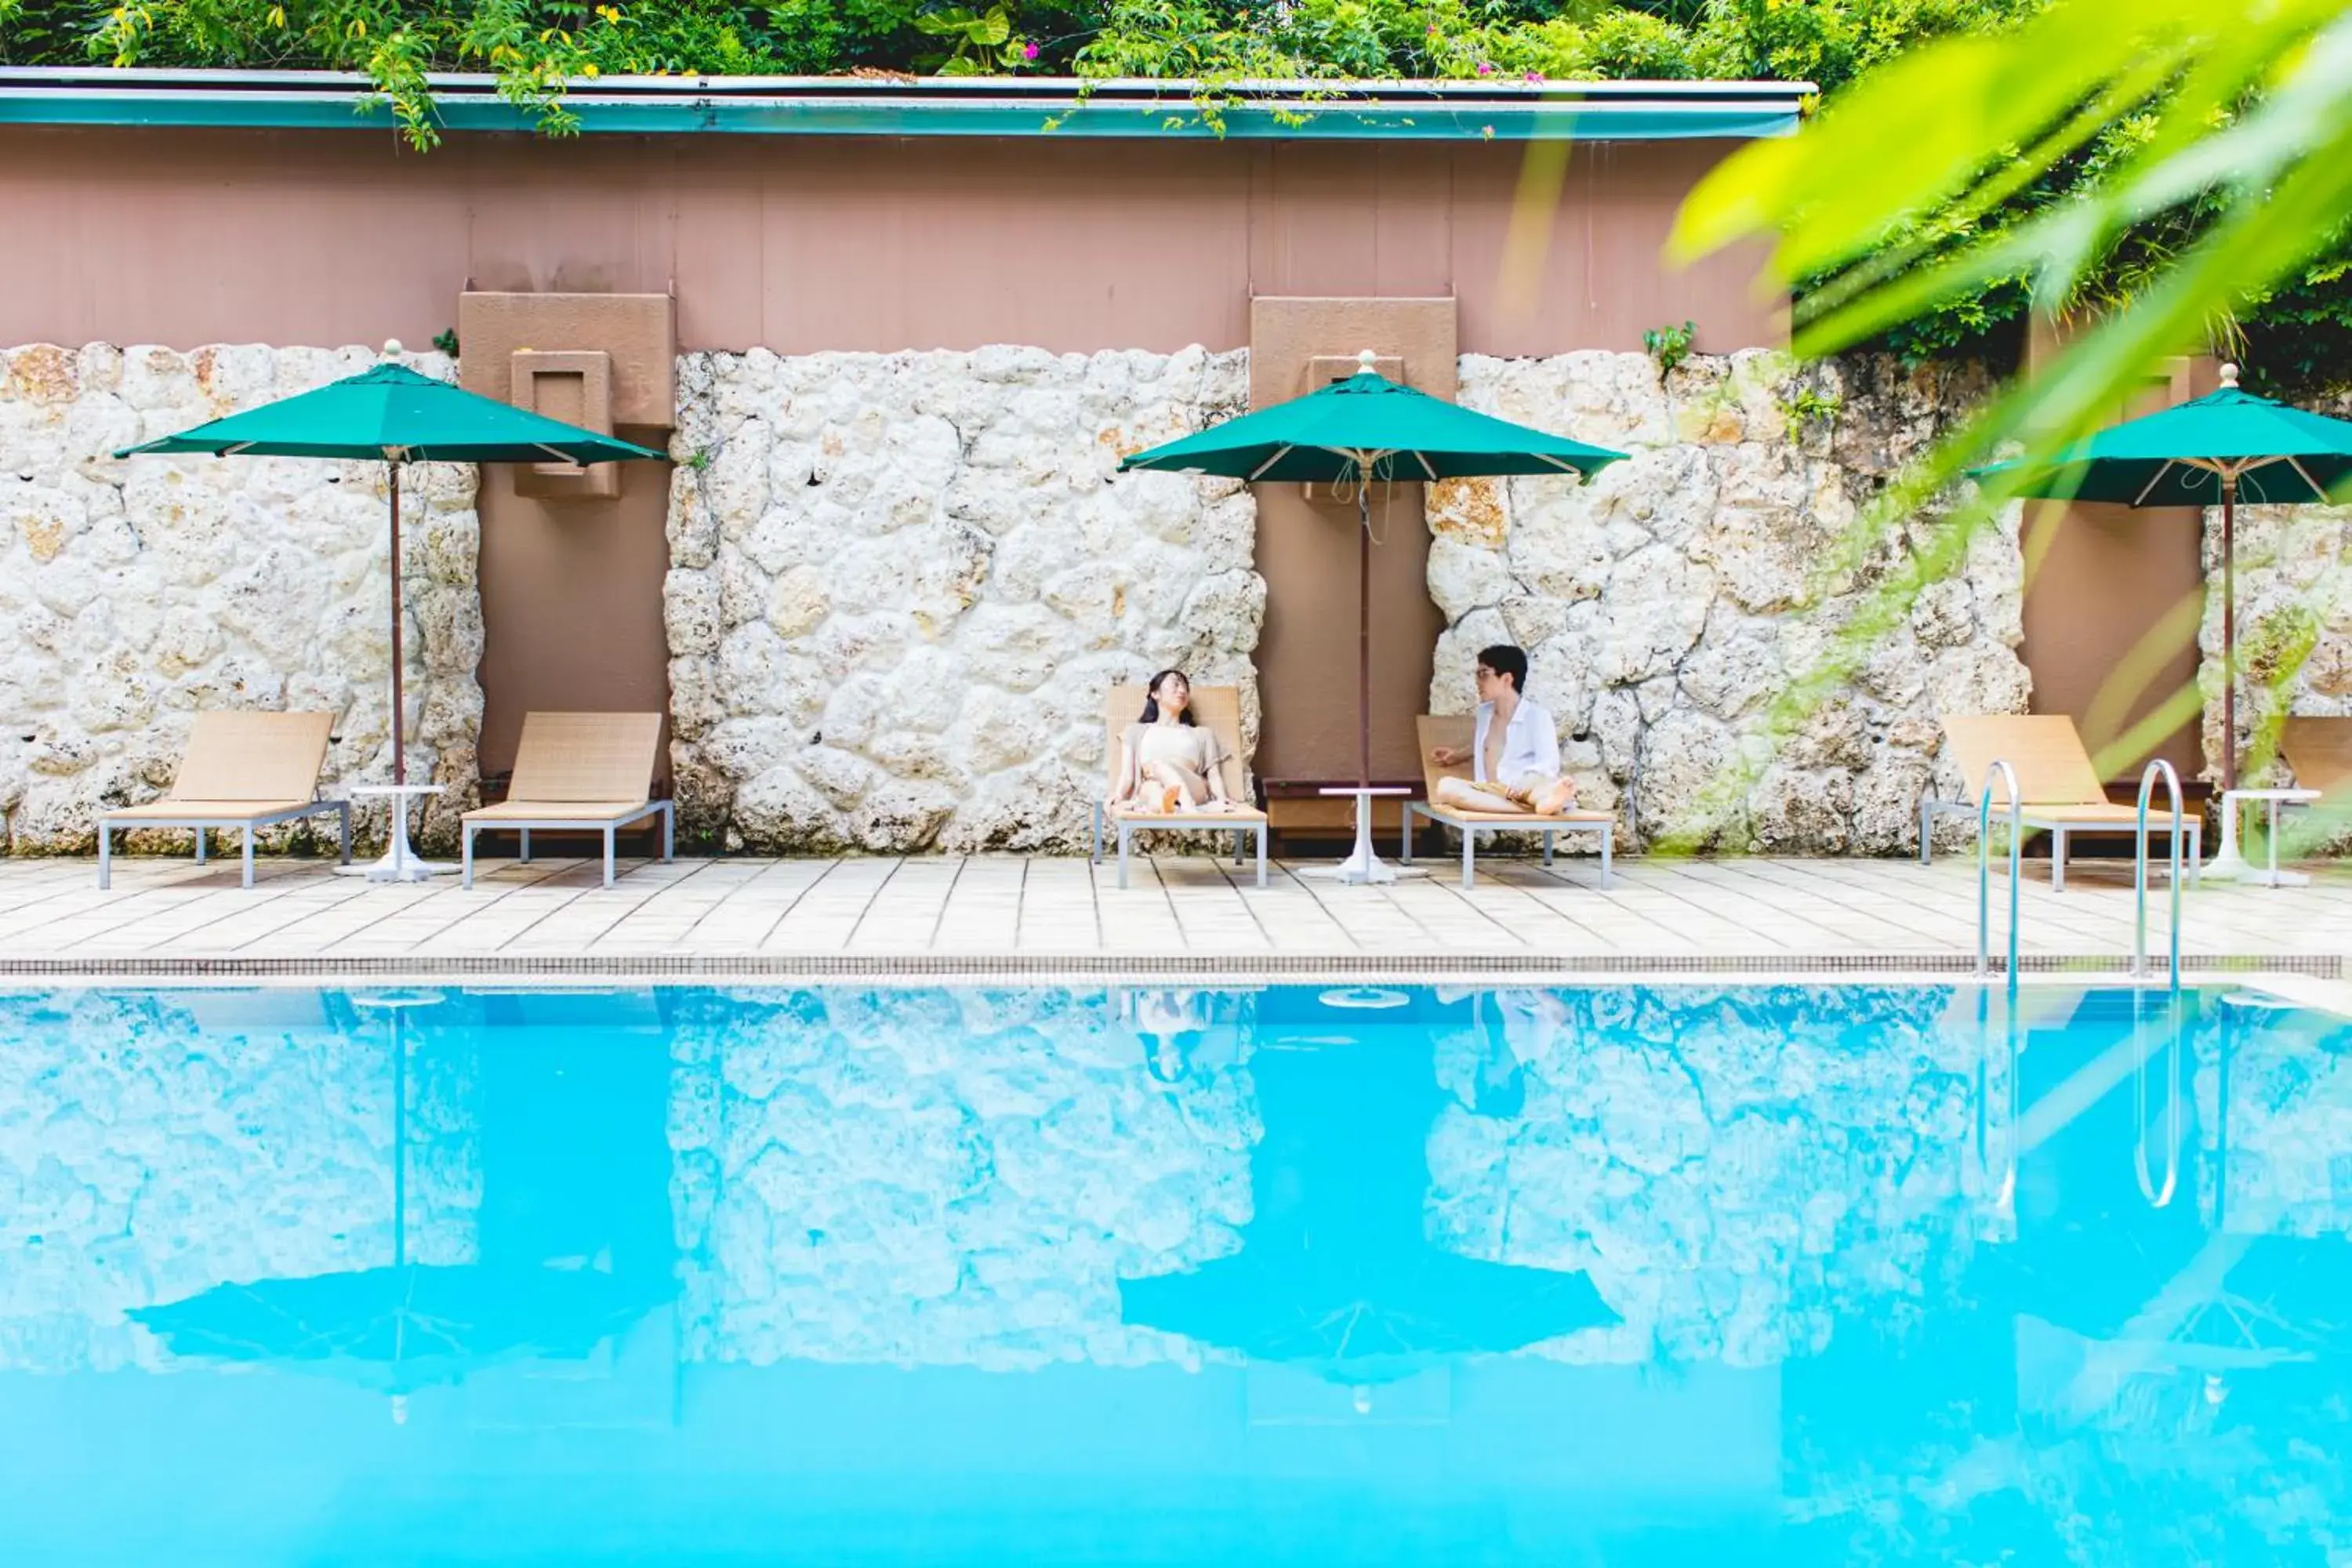 Swimming Pool in Okinawa Harborview Hotel